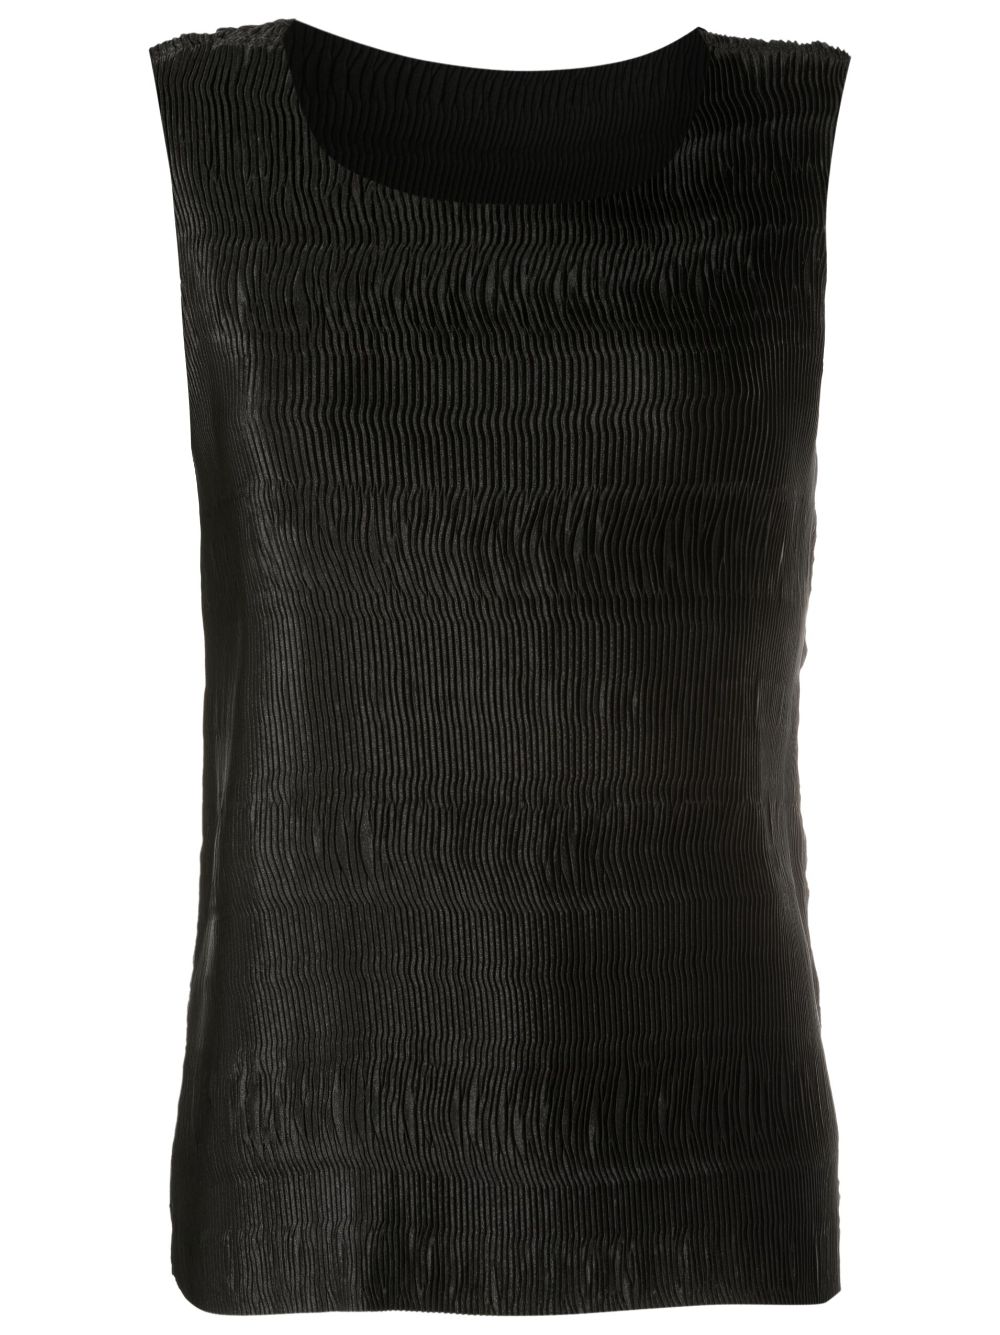 Uma | Raquel Davidowicz plissé-effect satin sleeveless top - Black von Uma | Raquel Davidowicz